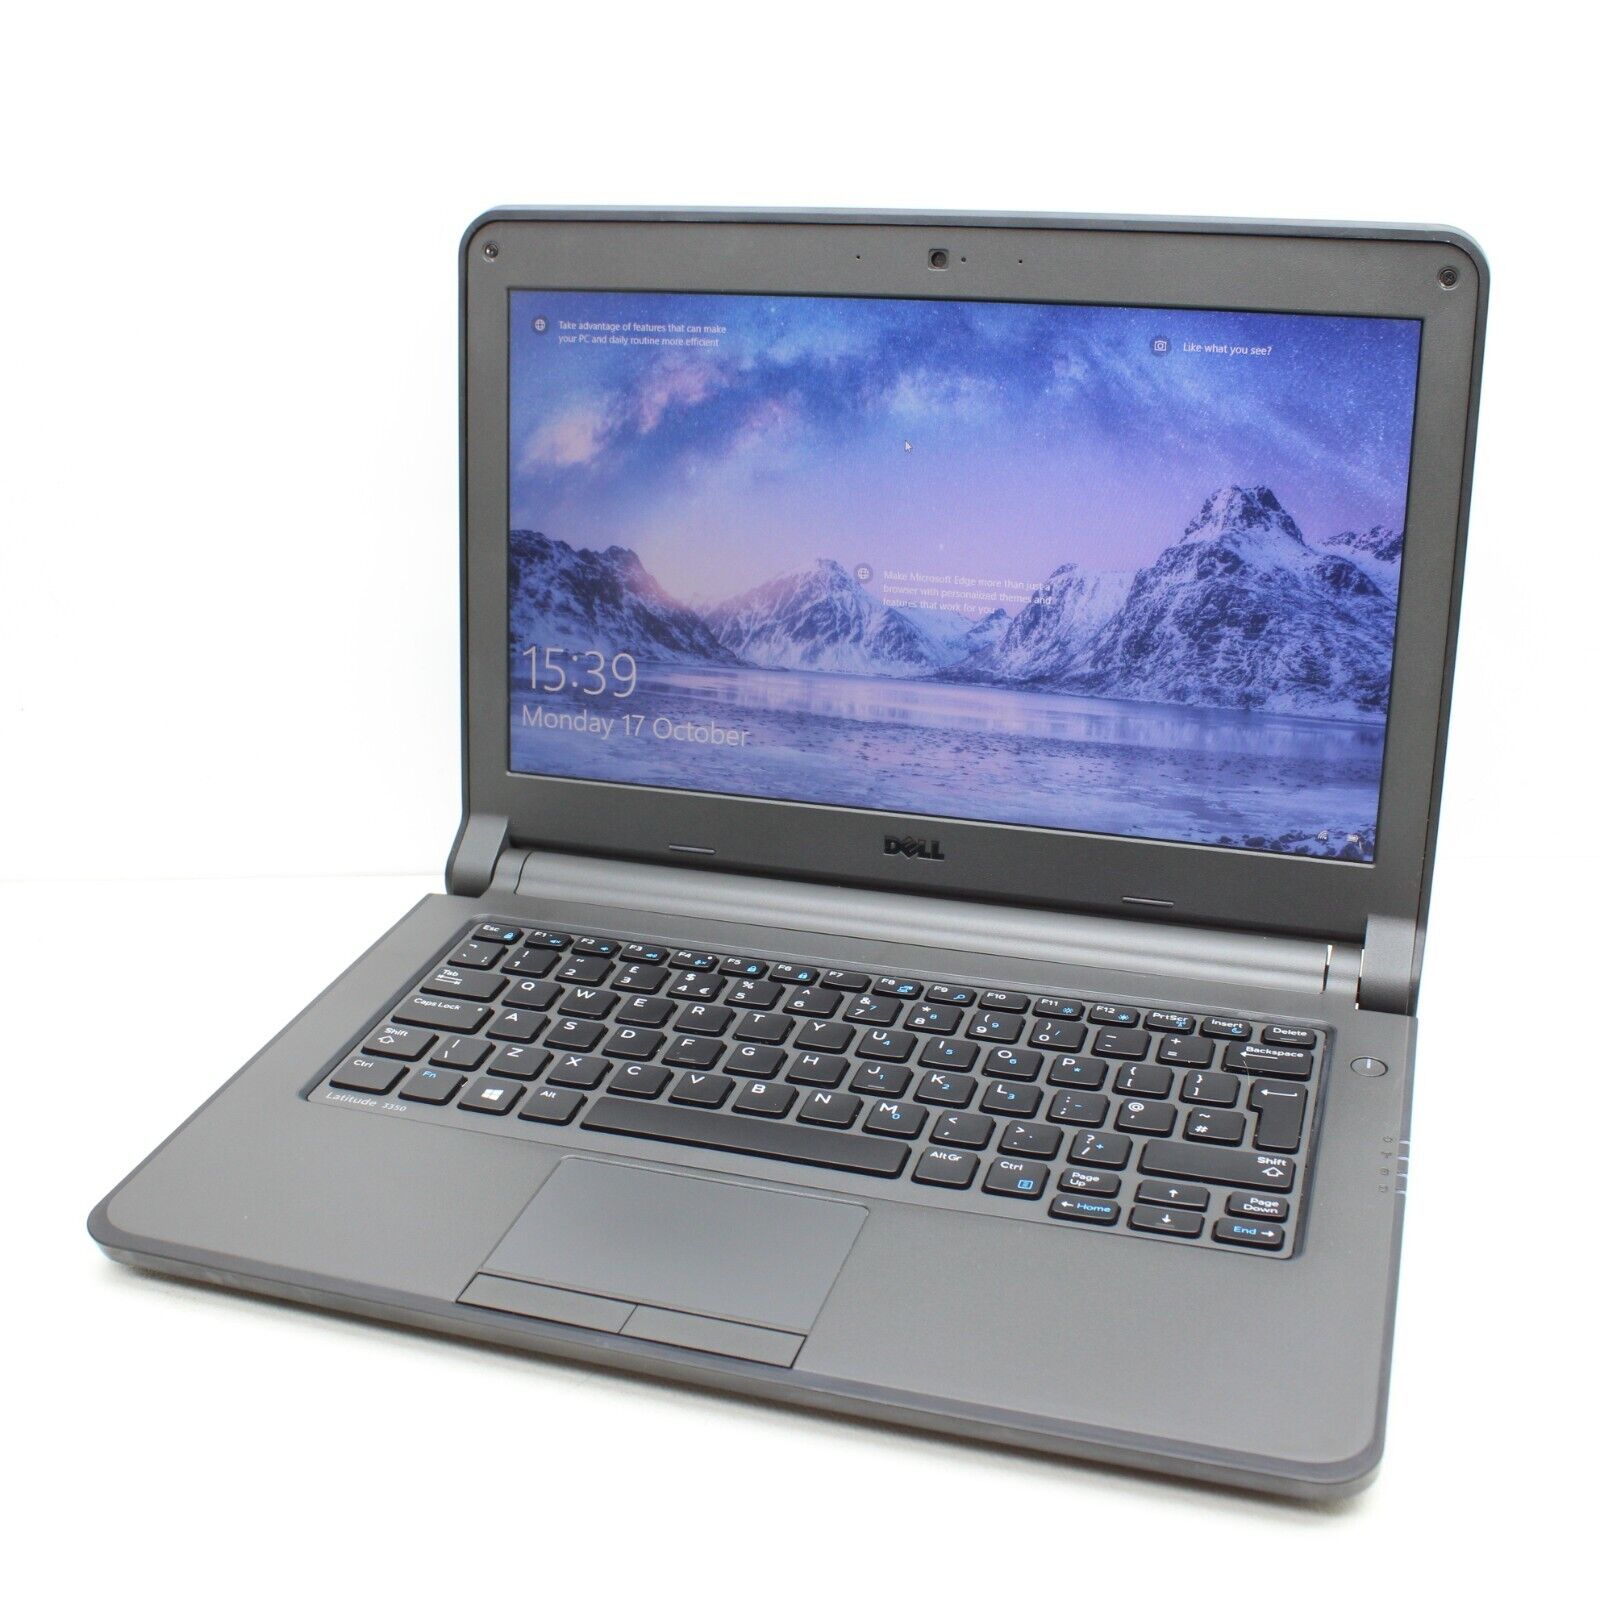 Dell Latitude 13 3350 Laptop Price in Pakistan